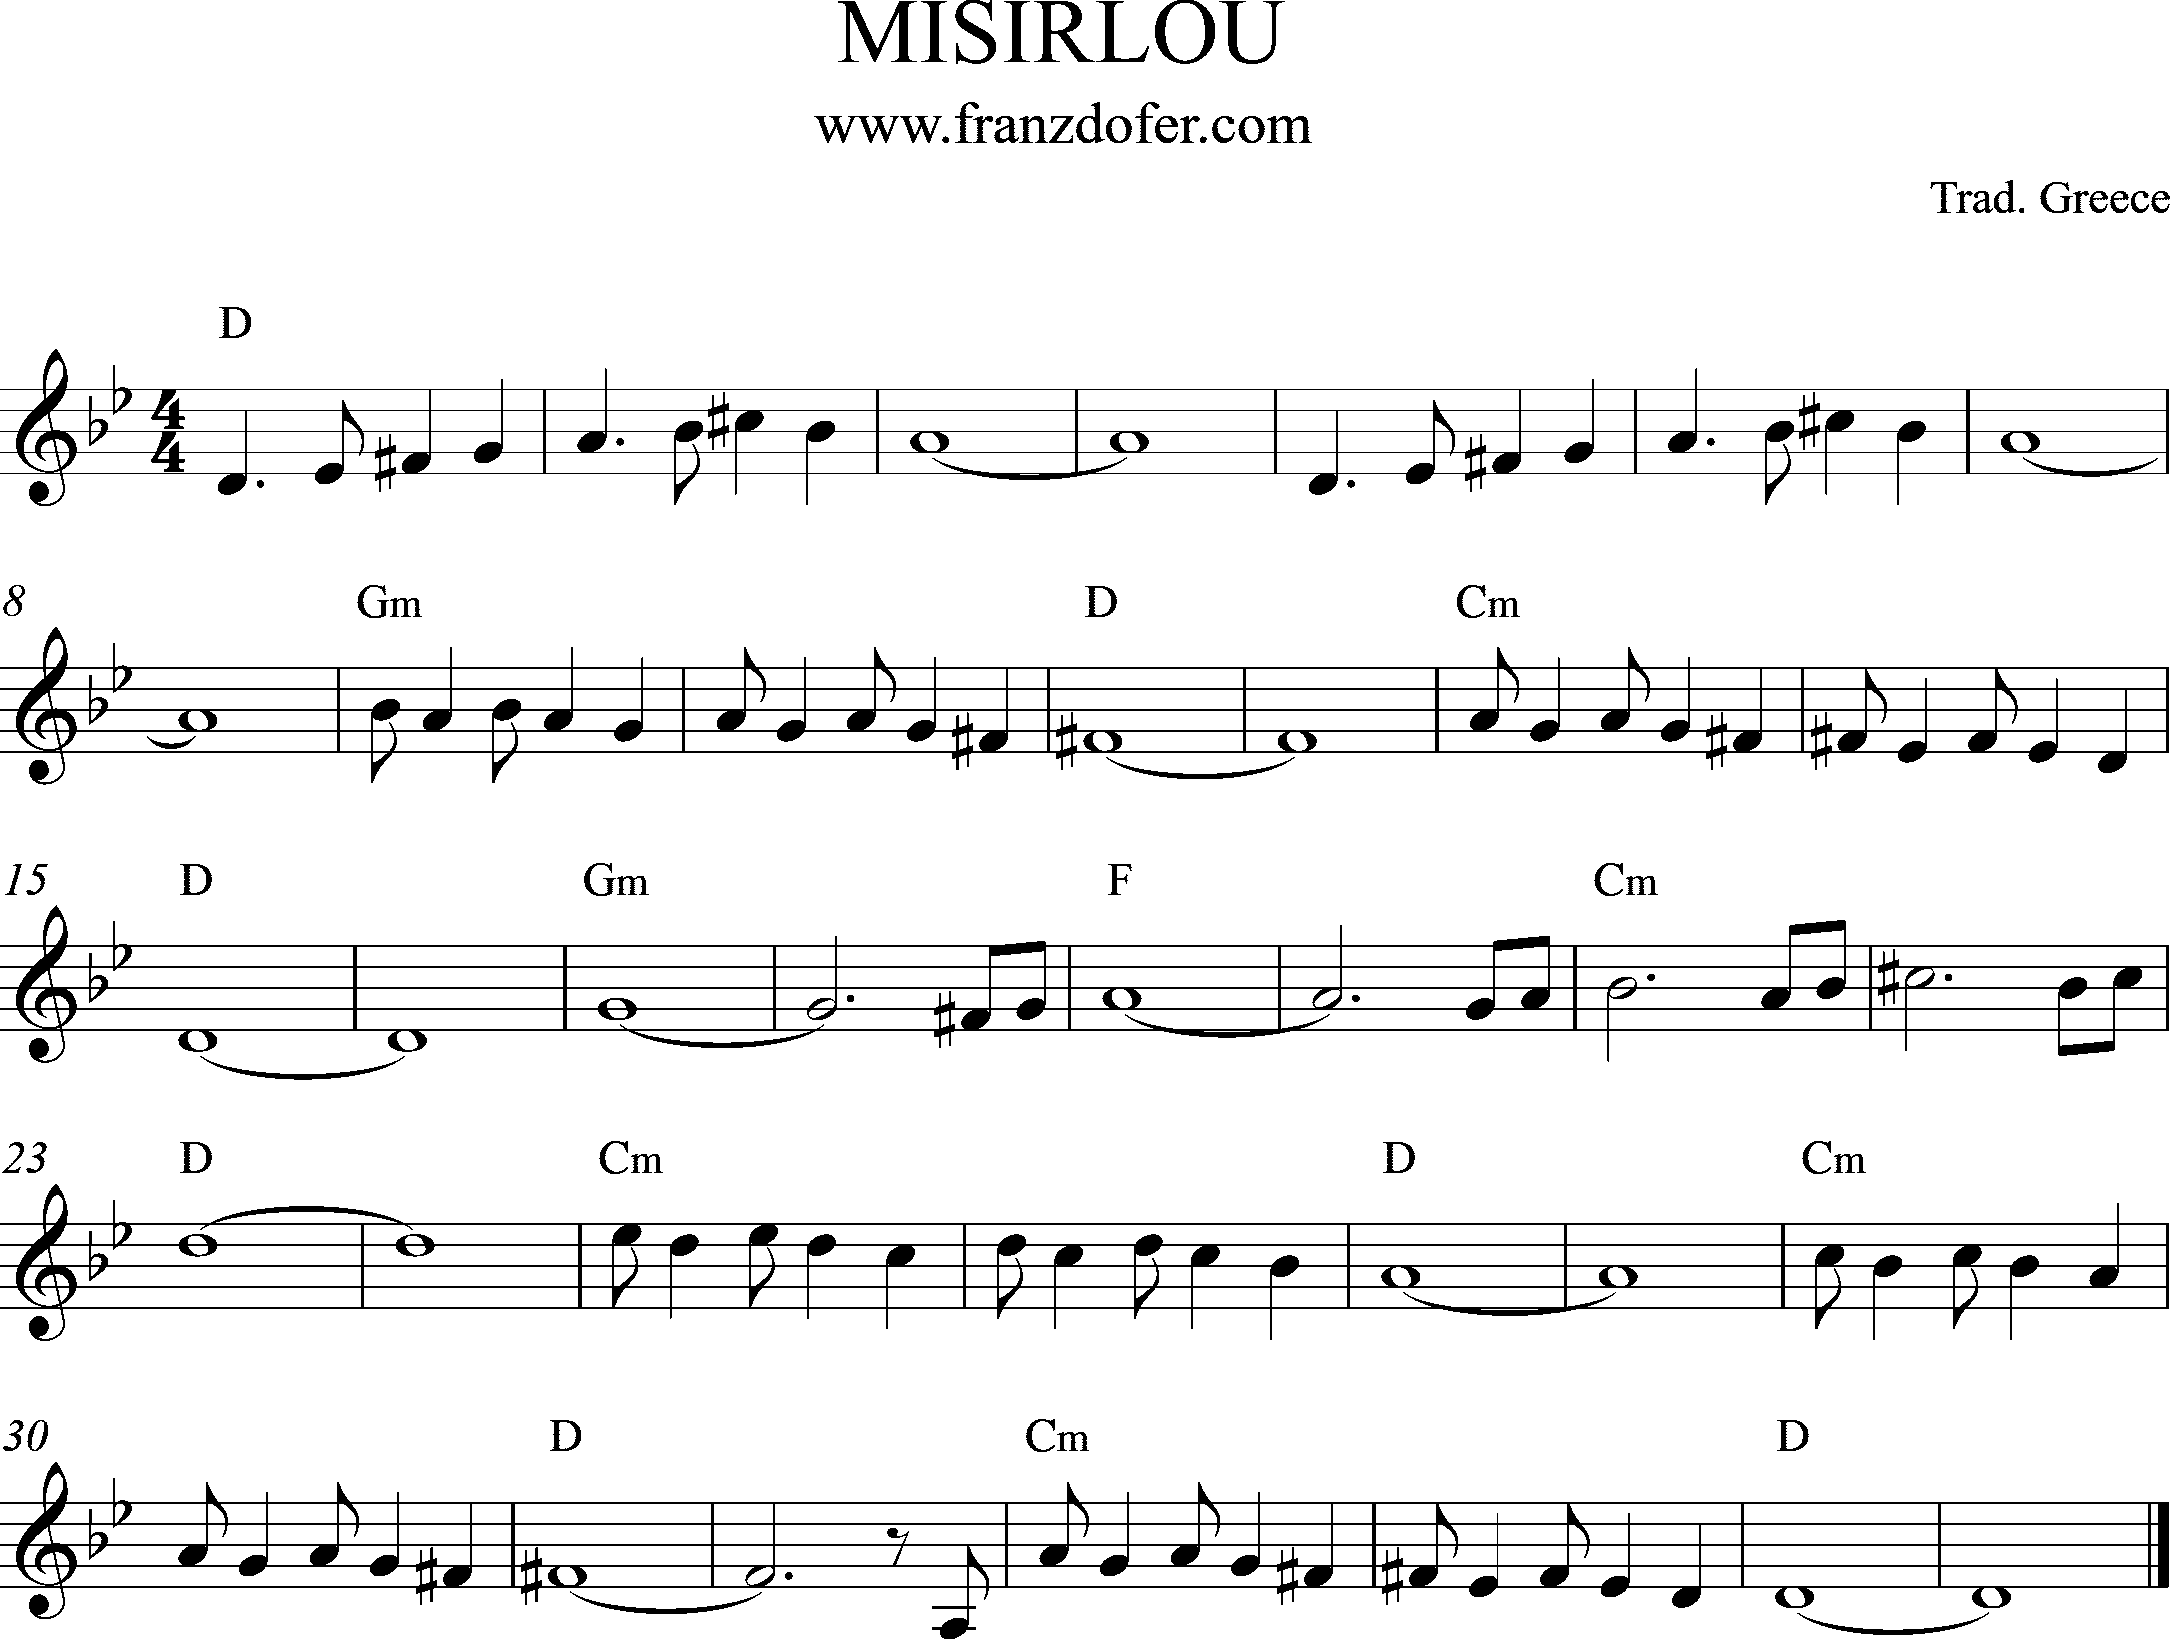 MISIRLOU - Sheetmusic